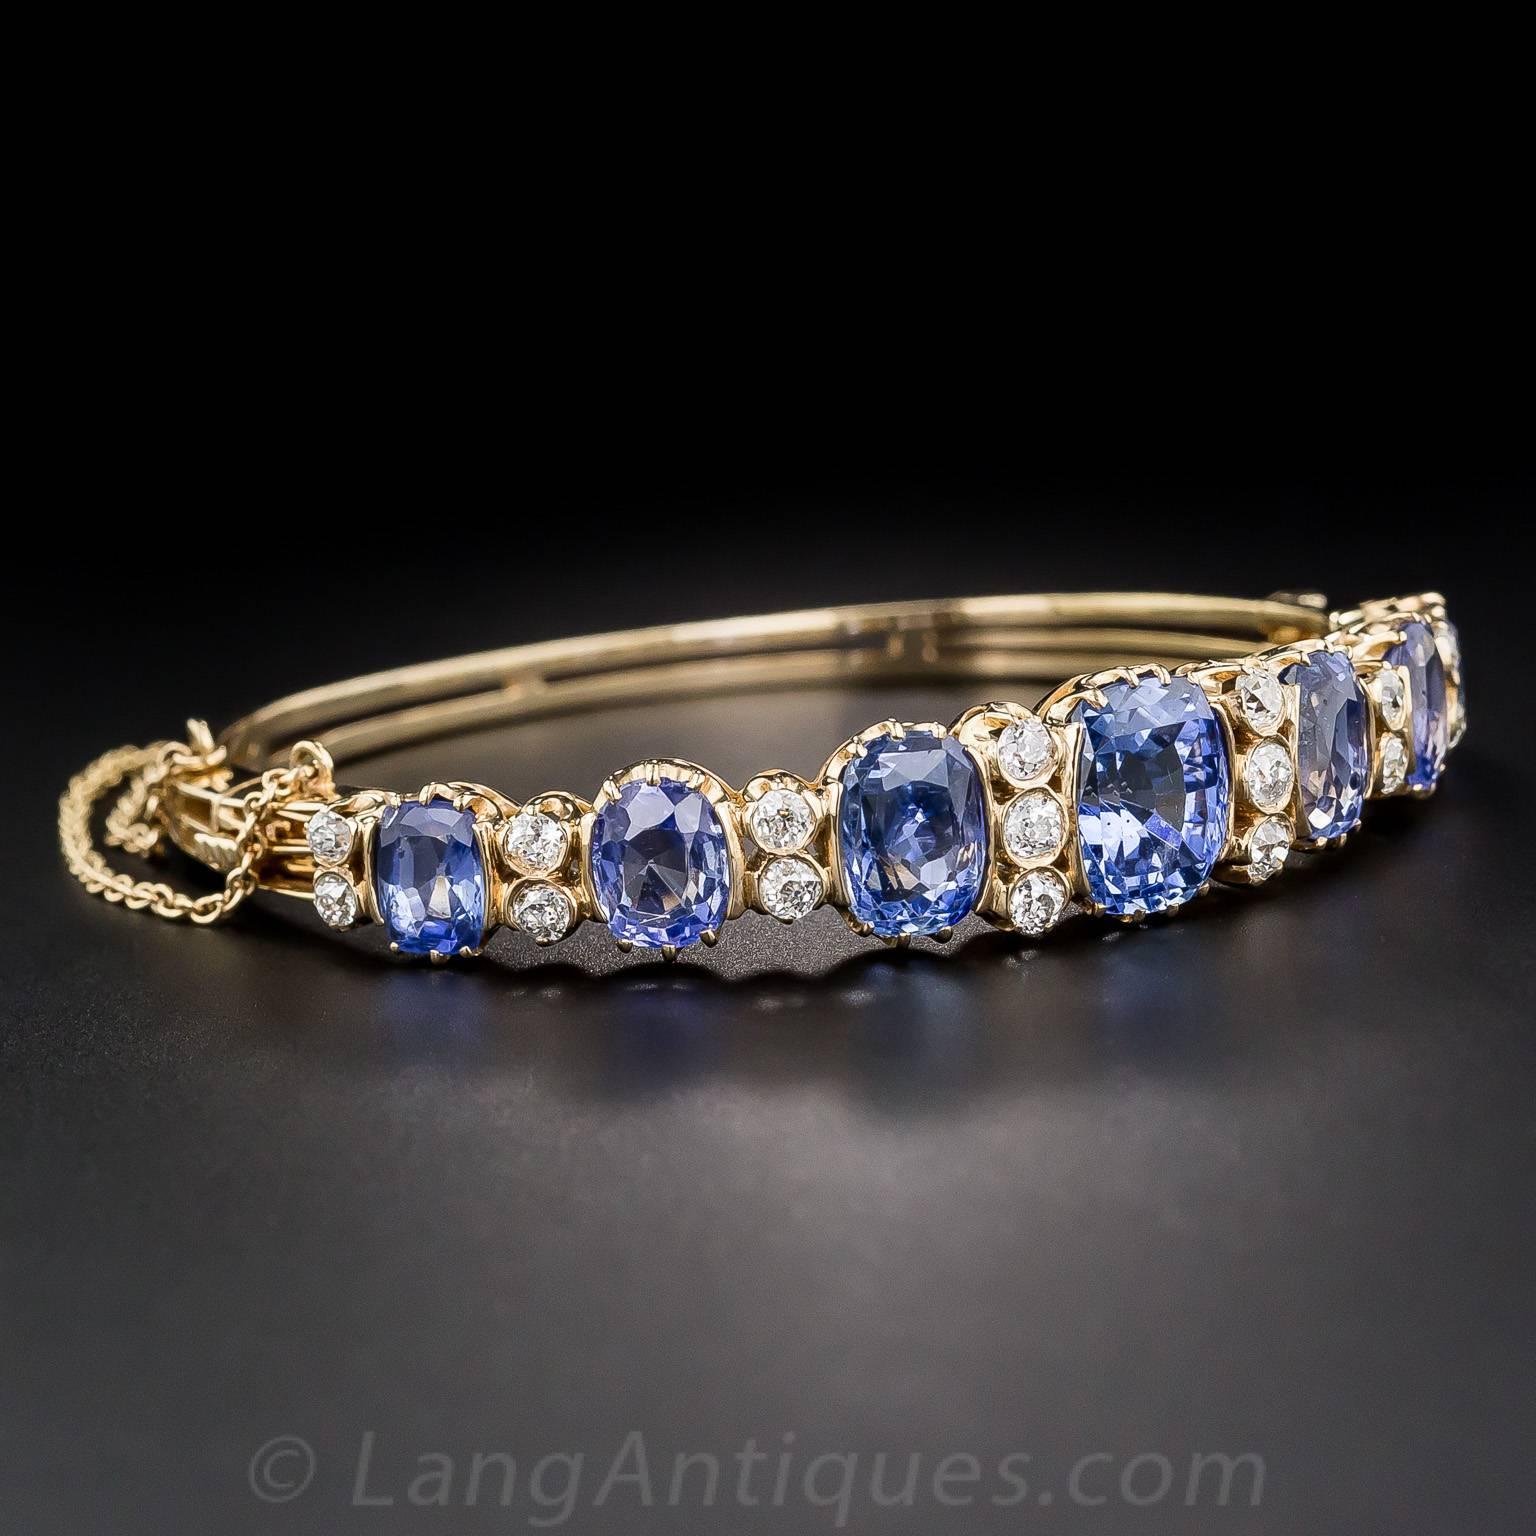 Late Victorian 18 Carats No-Heat Ceylon Sapphire Diamond Gold Bangle Bracelet For Sale